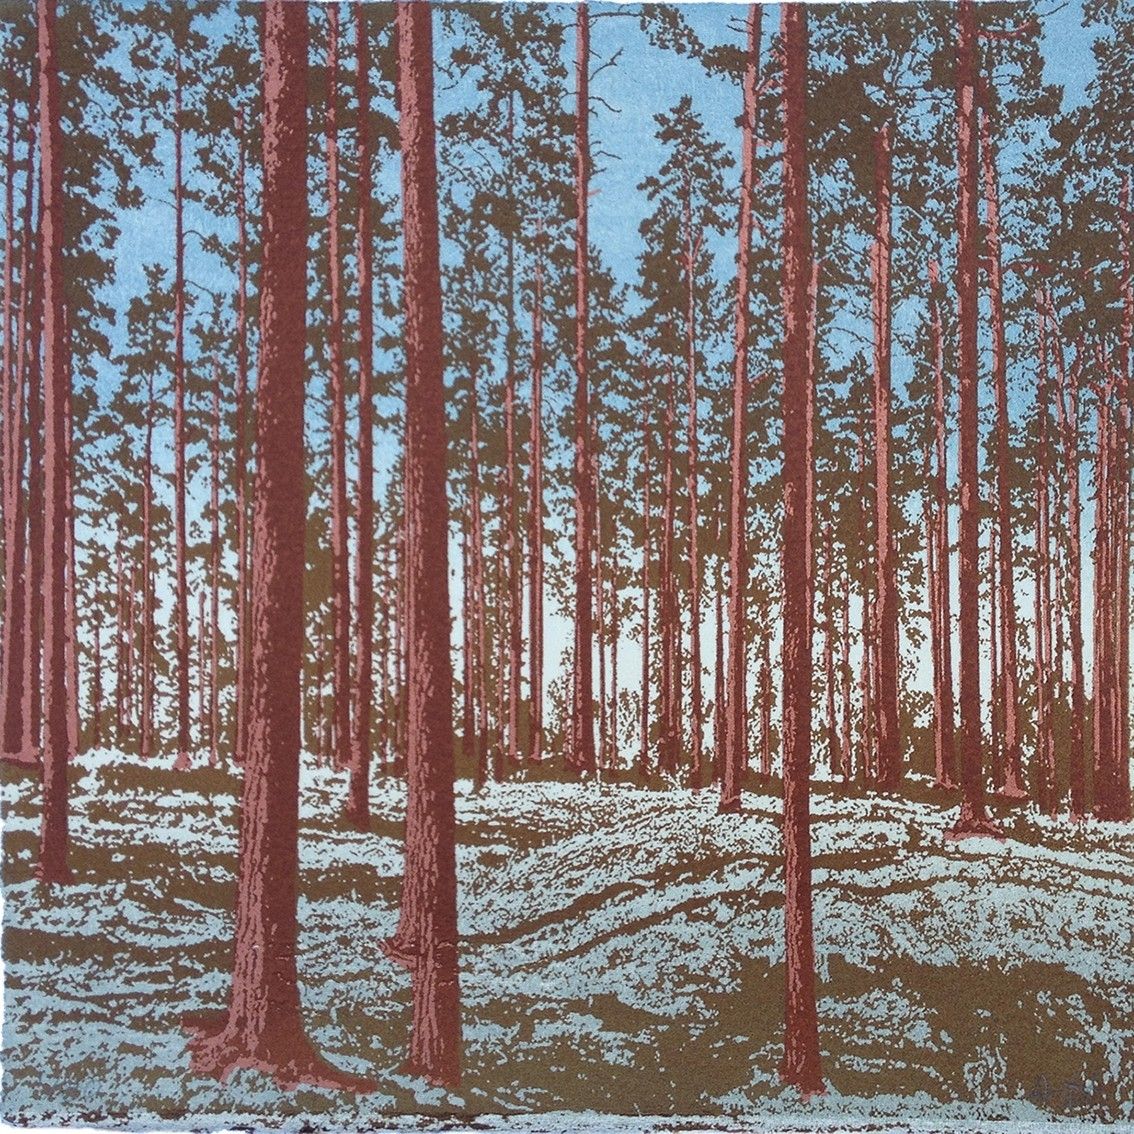 Swedish Pines Mini by Anna Harley